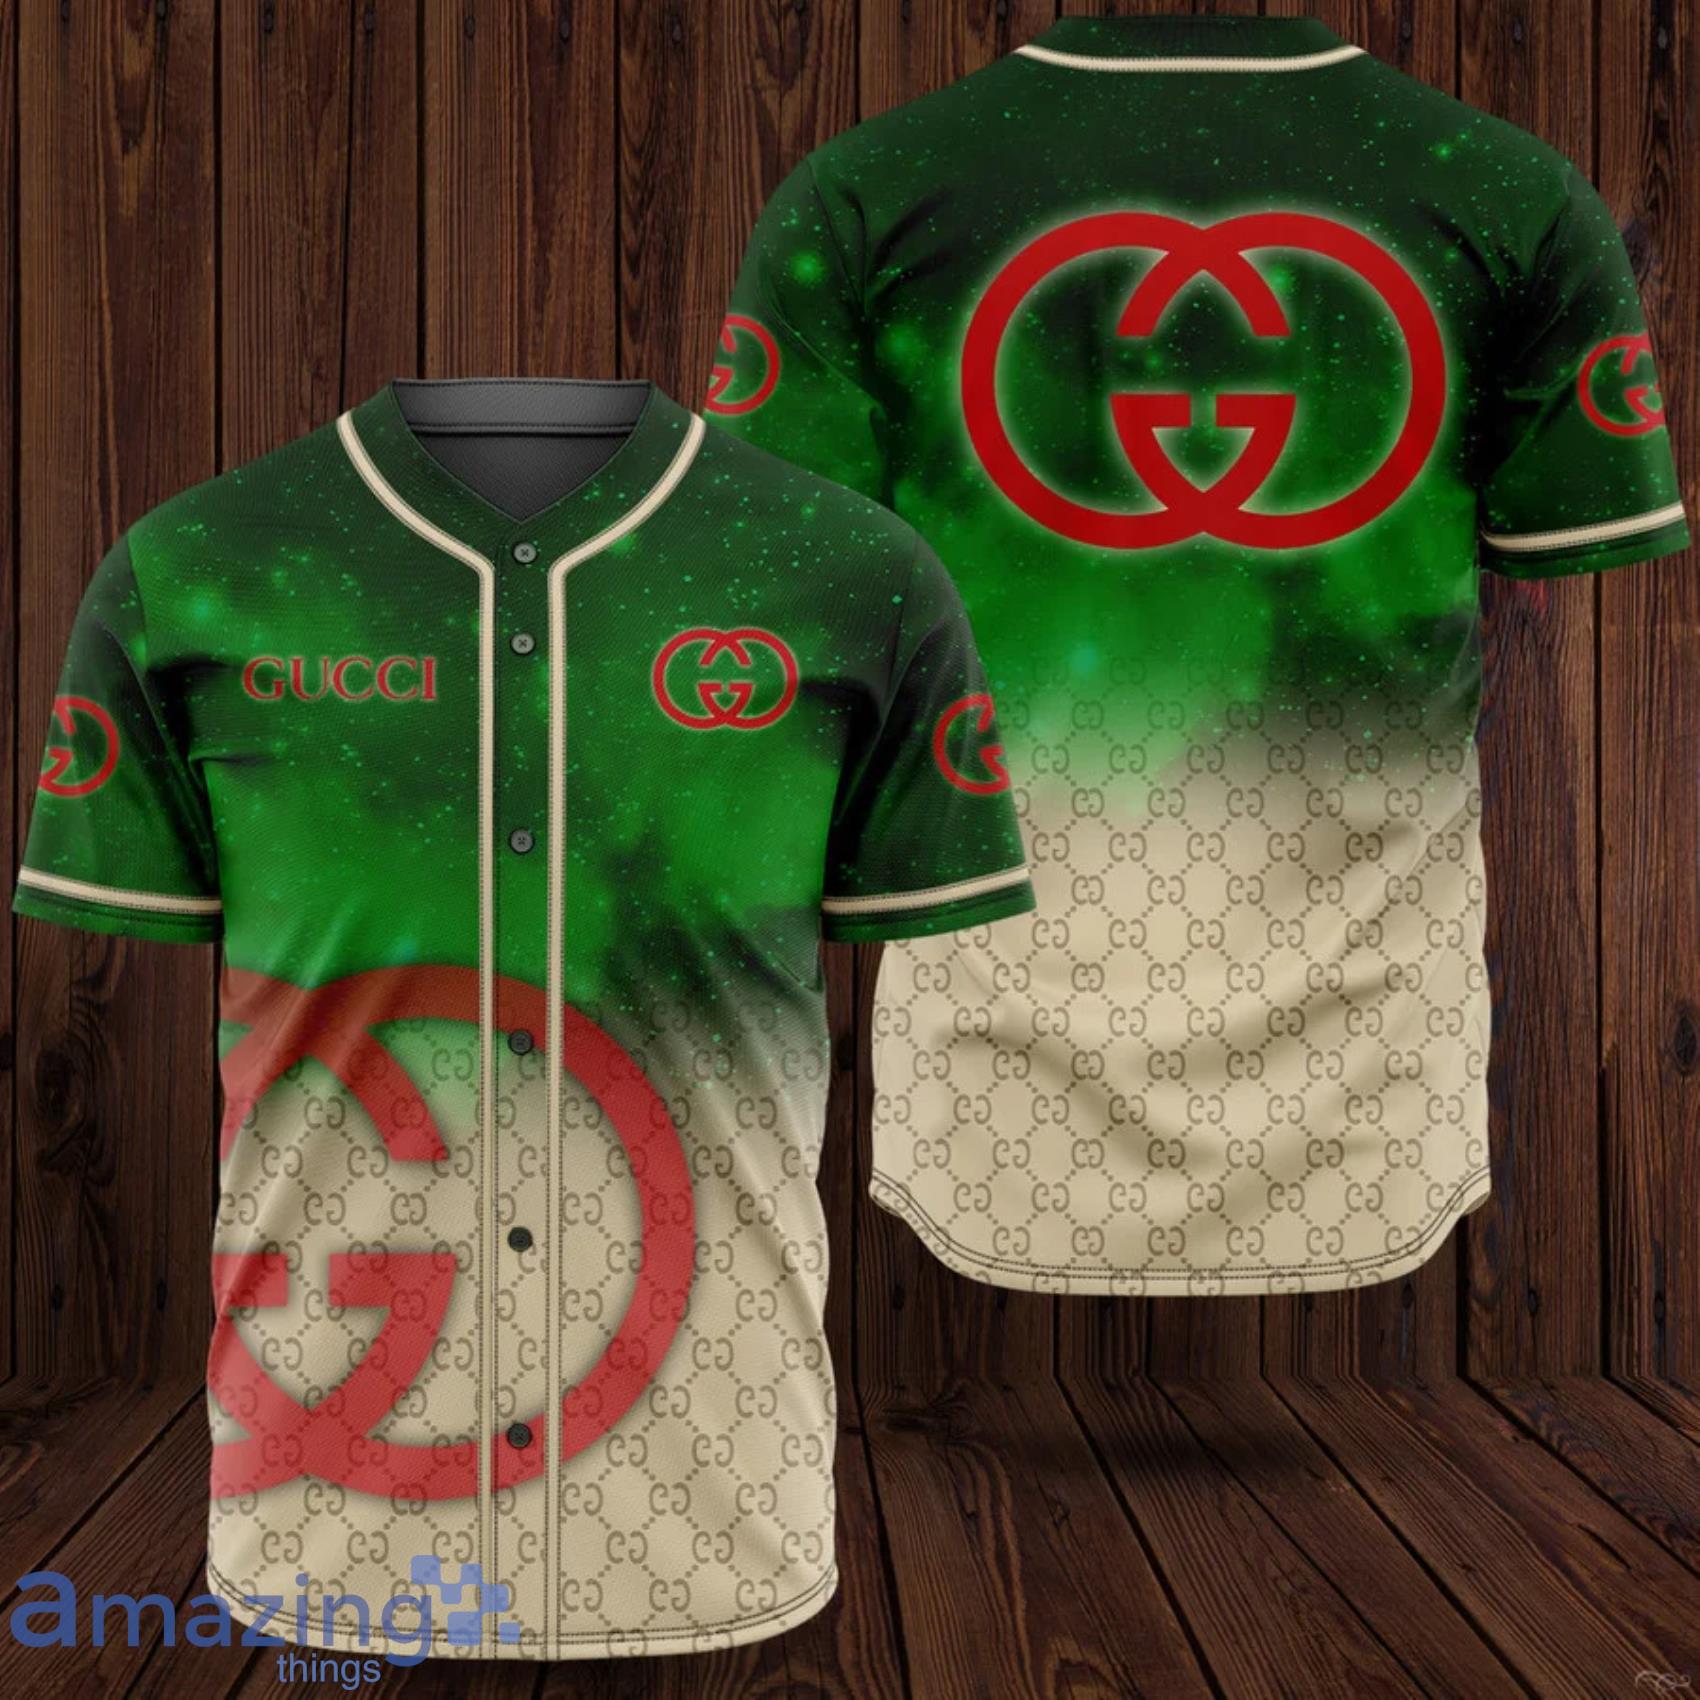 Gucci Green Galaxy Baseball Jersey Clothes Sport For Men Women